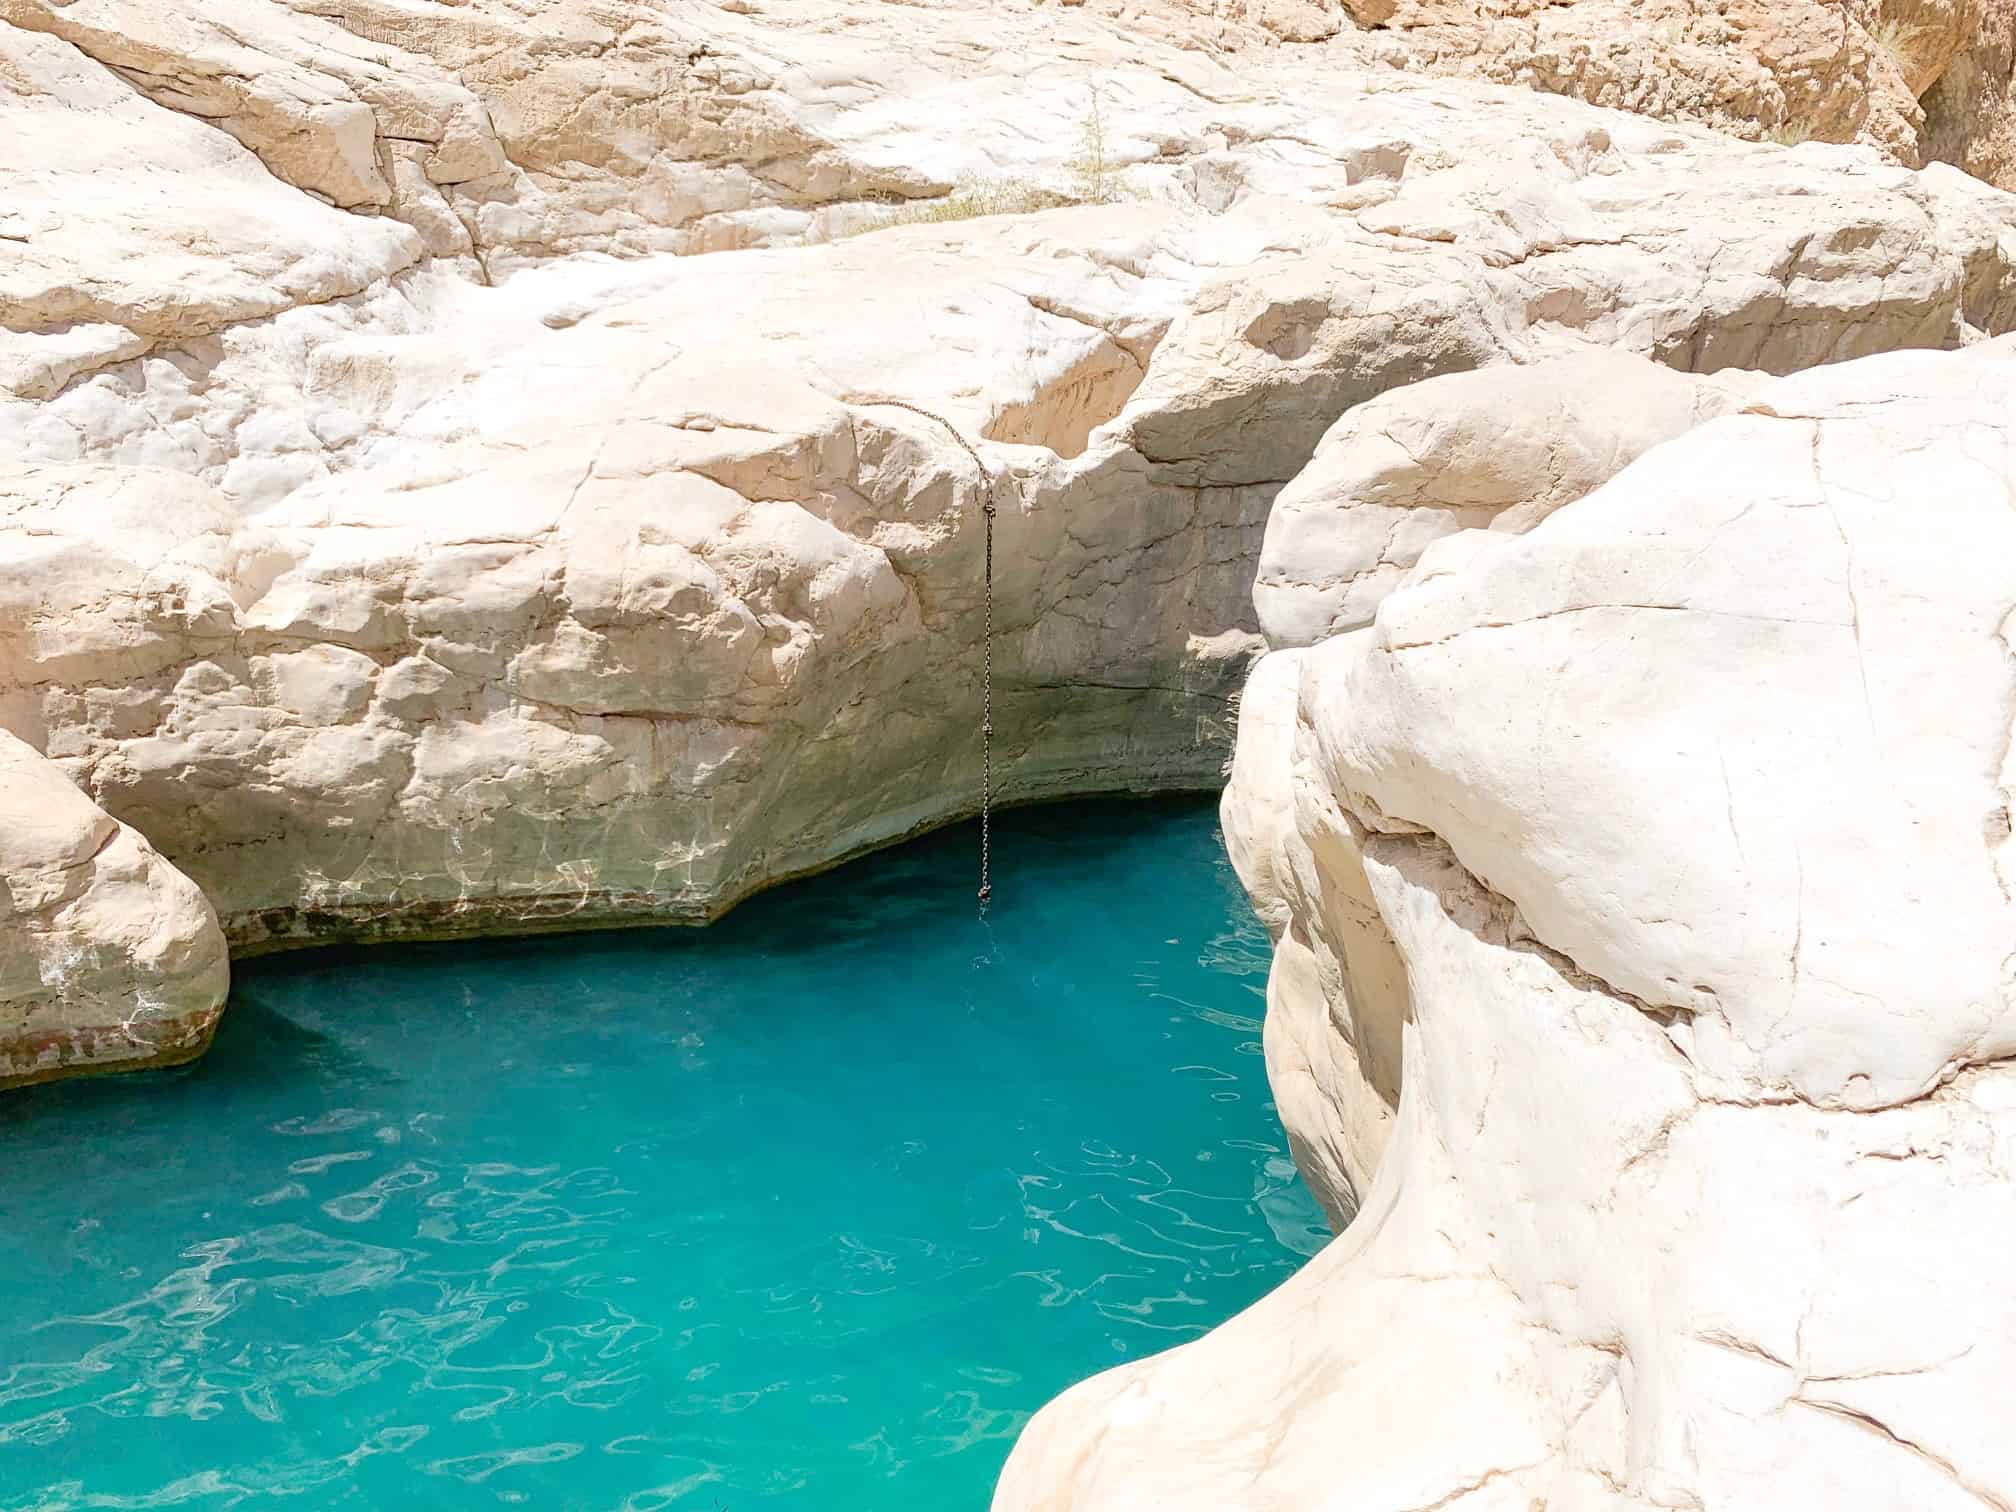 Chains for swimming in deep water at Wadi Bani Khalid